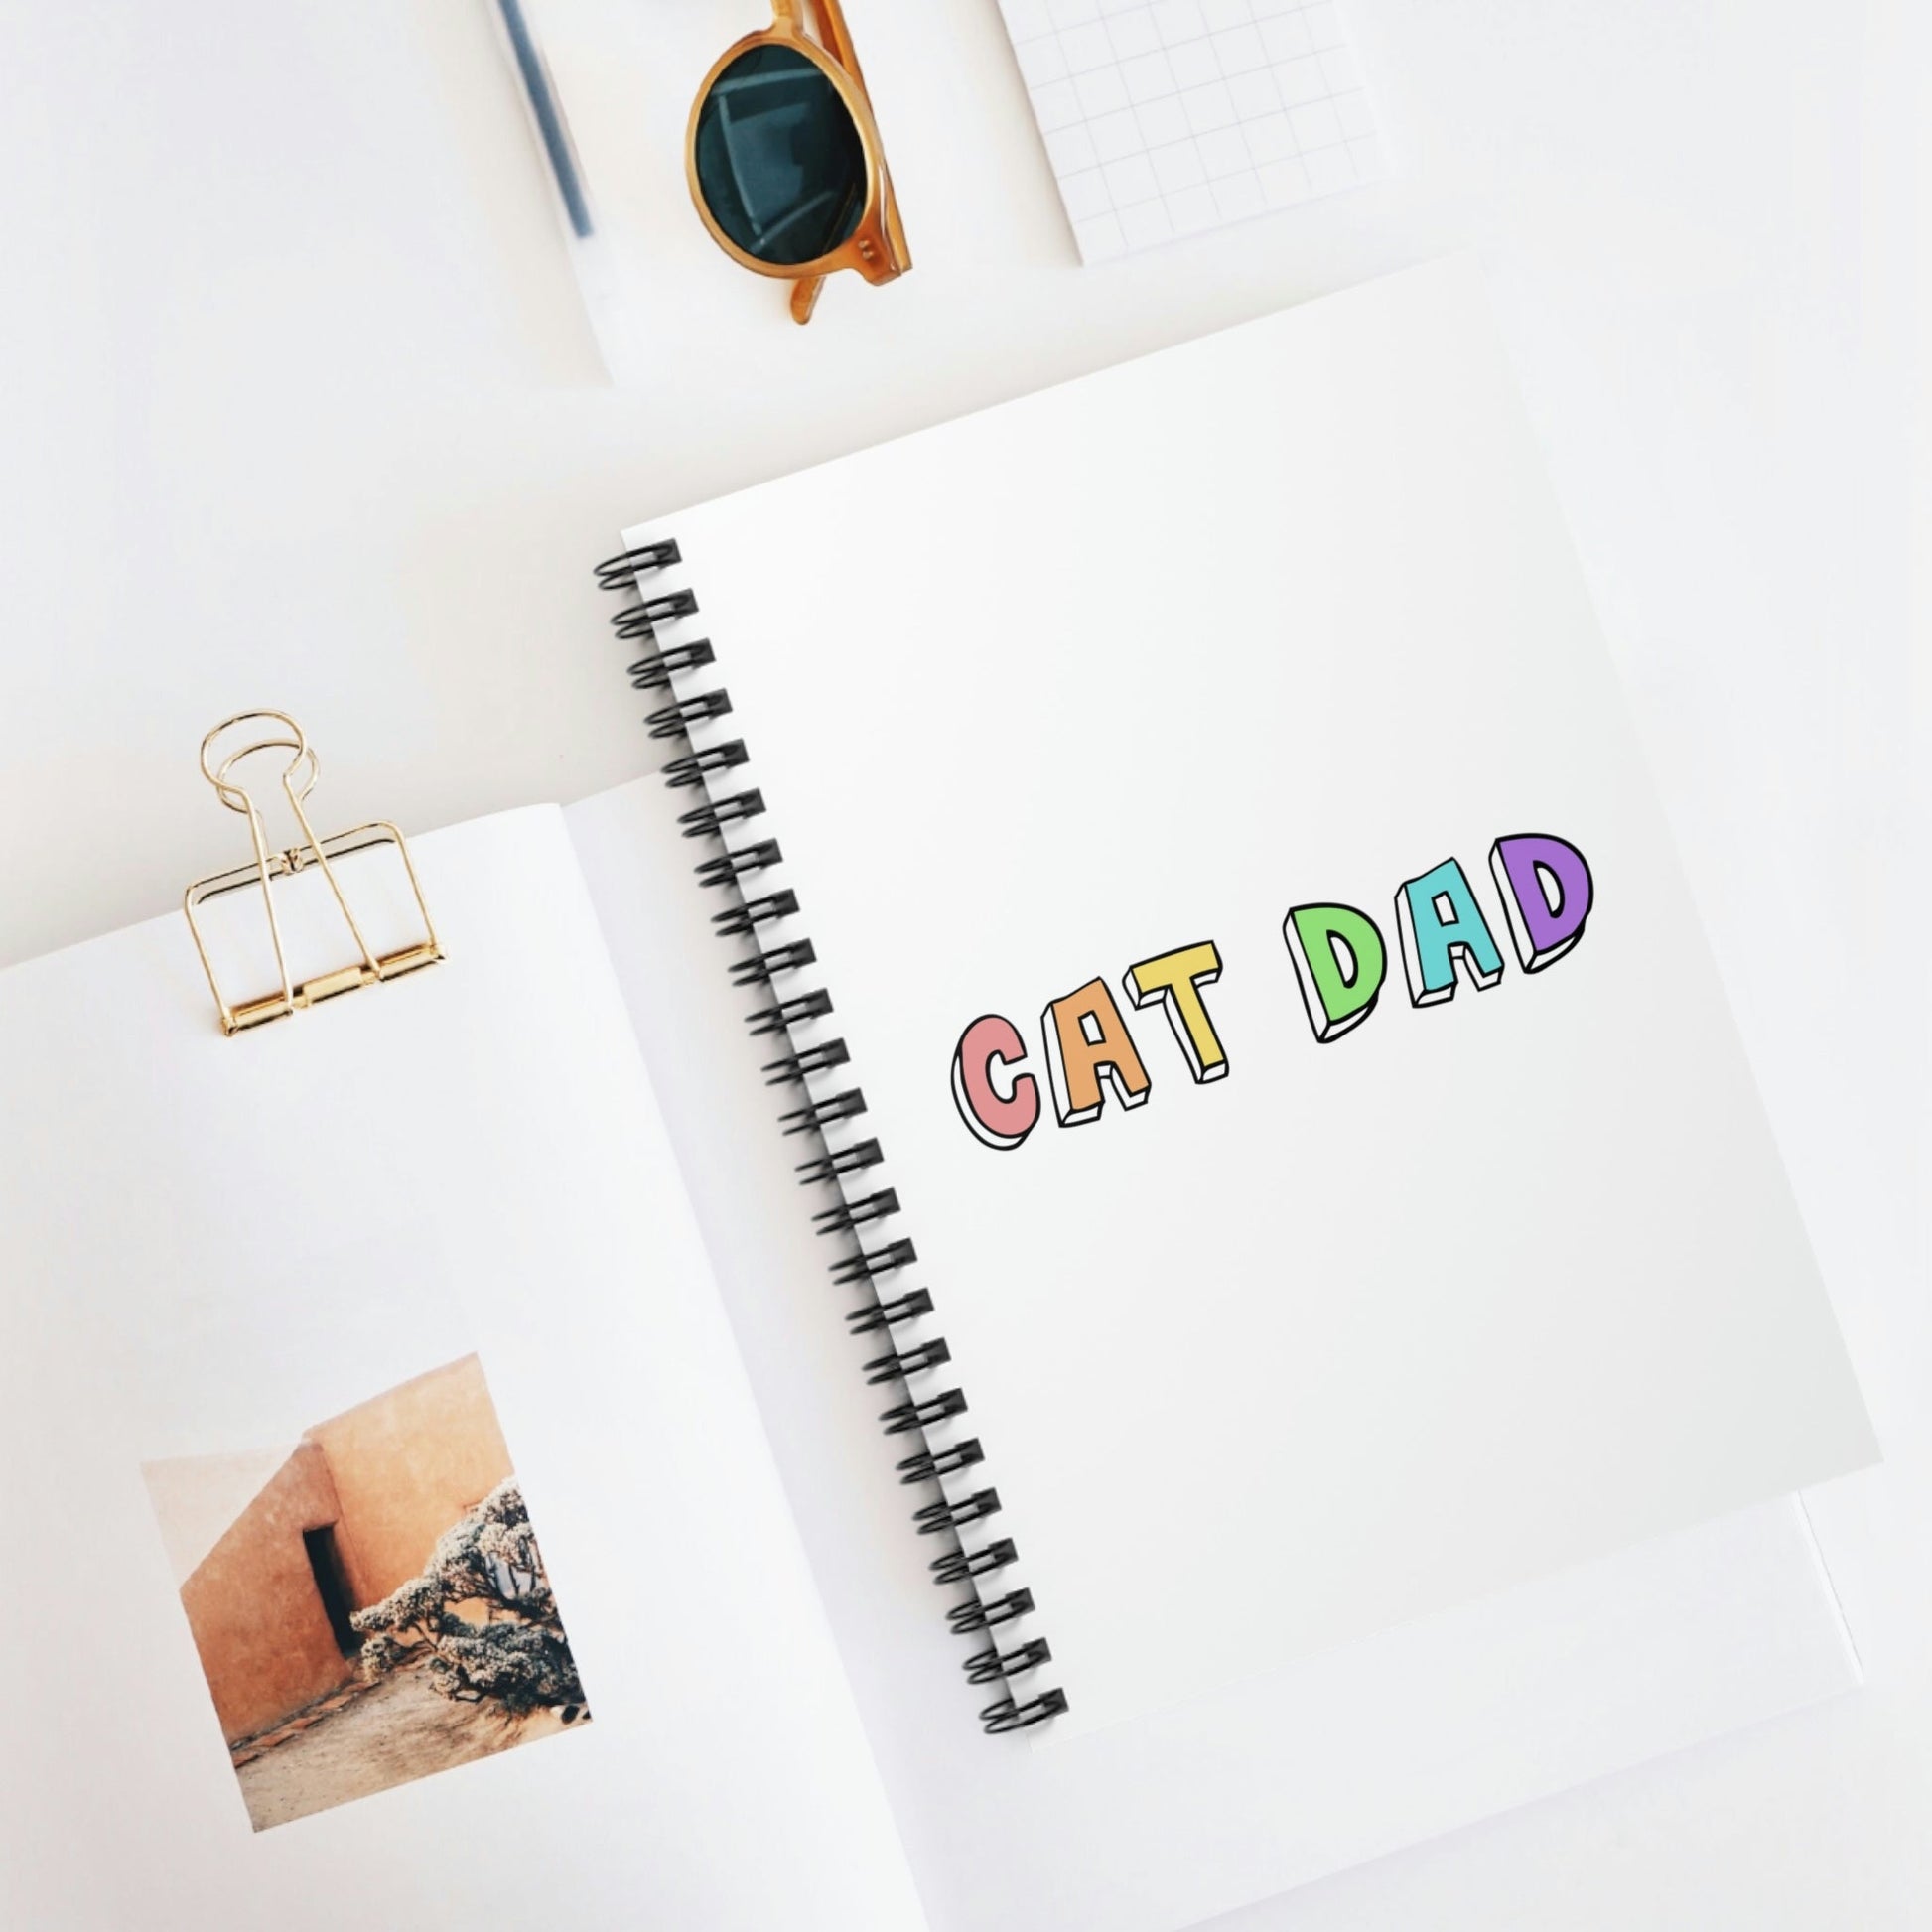 Cat Dad | Notebook - Detezi Designs-27808312088833744184